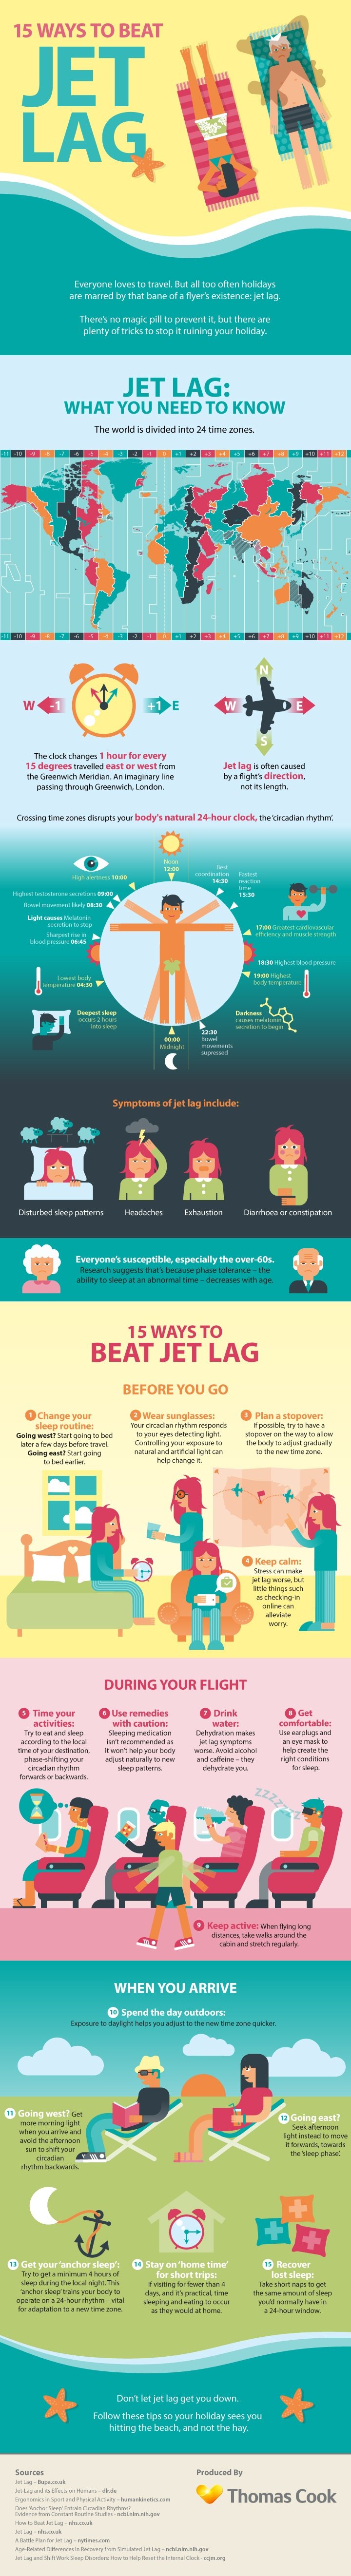 How-to-Beat-Jet-Lag